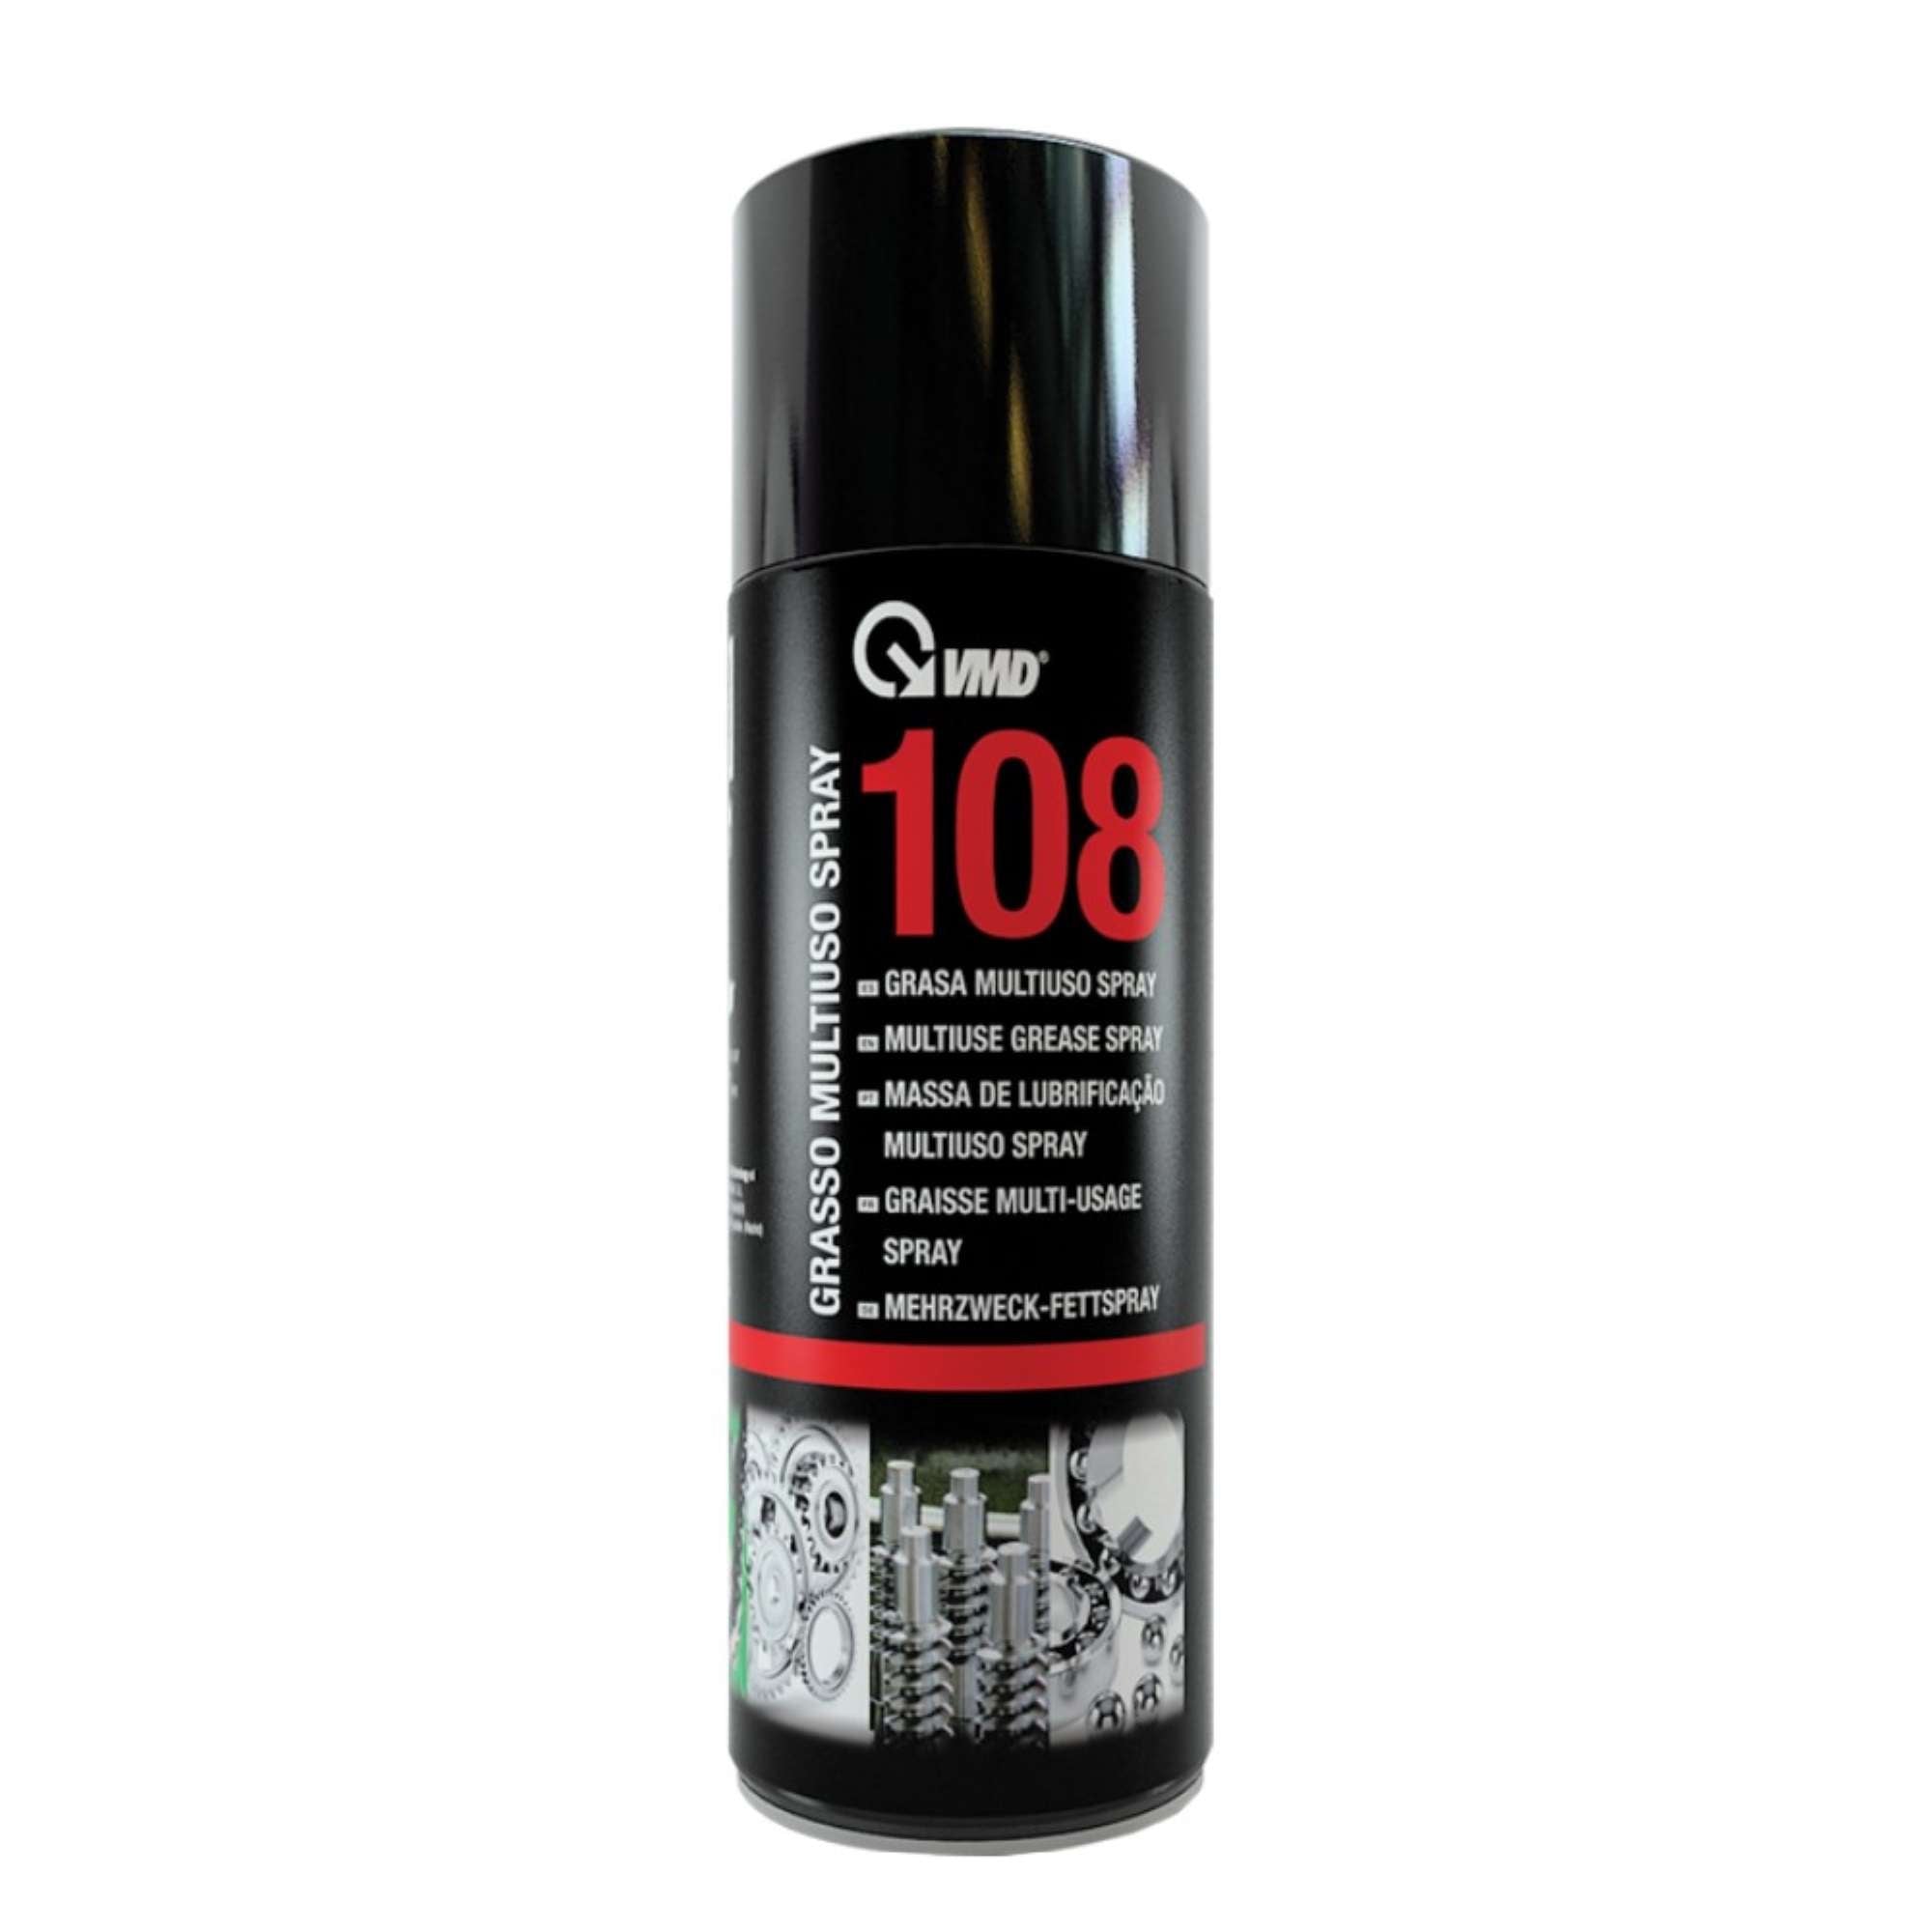 Grasso Spray multiuso VMD 108